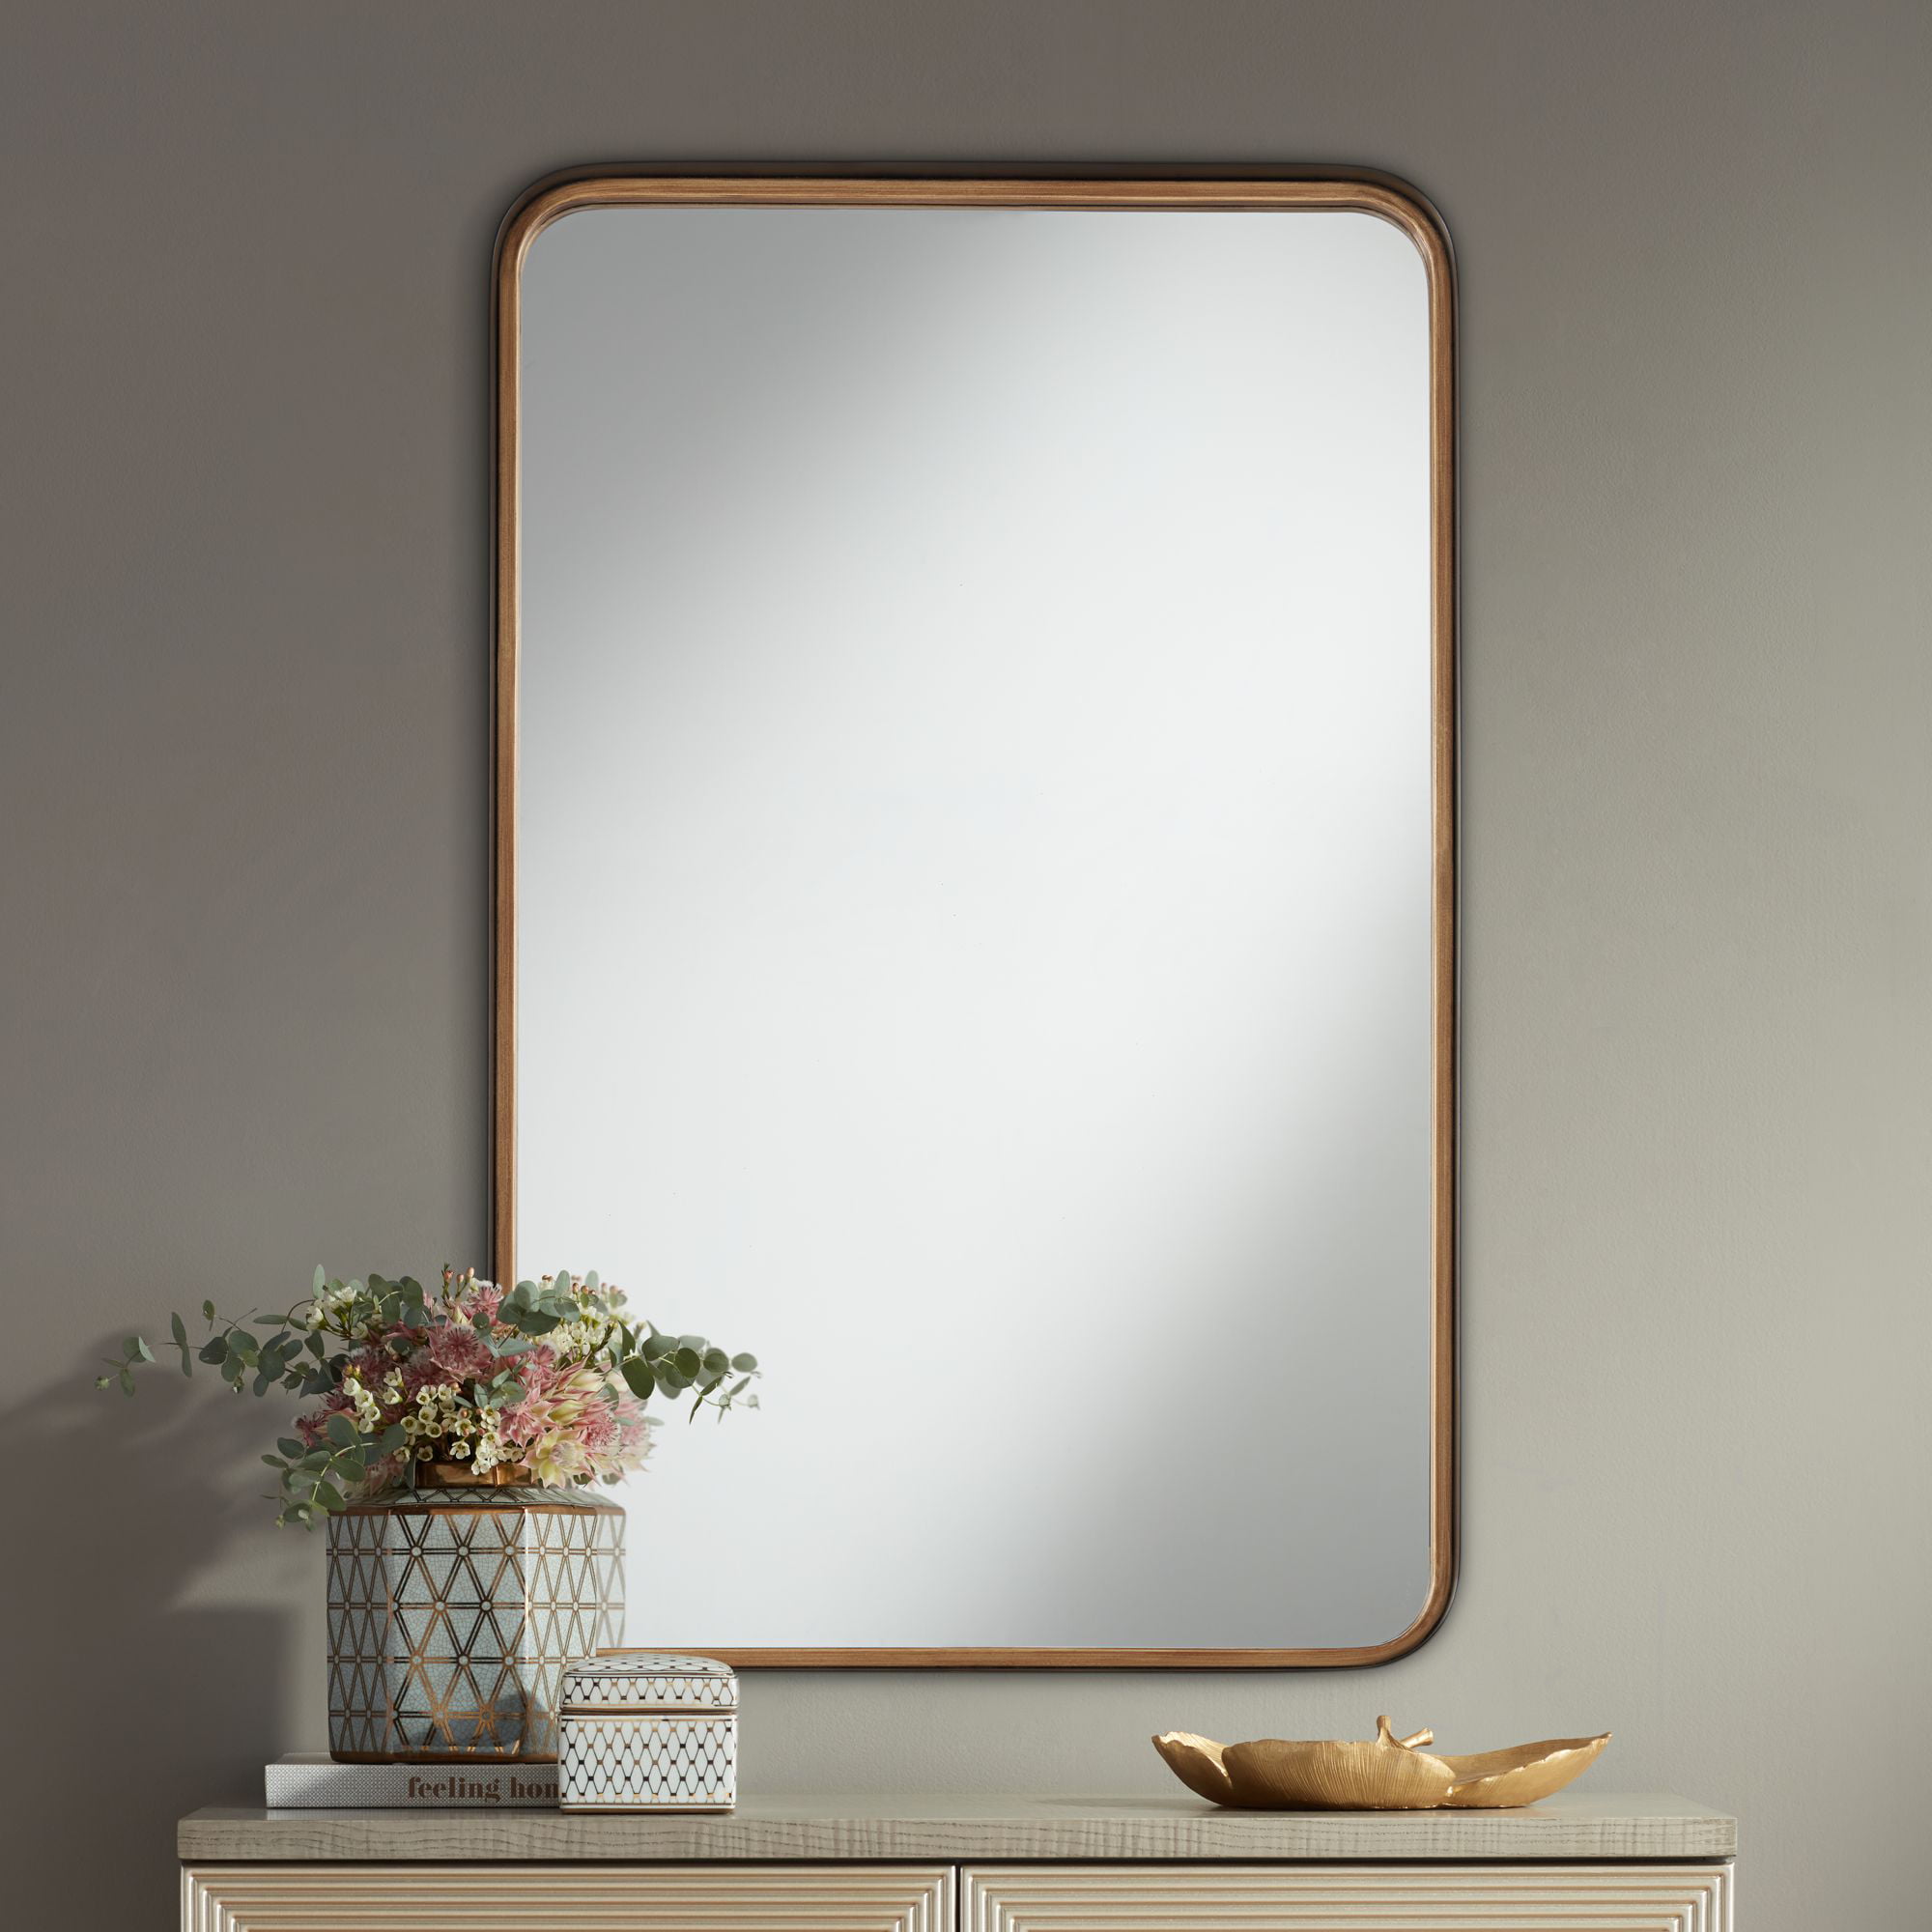 Standing Rectangular Gold Frame Bathroom Shaving Glass Decorative Mirror Stand 